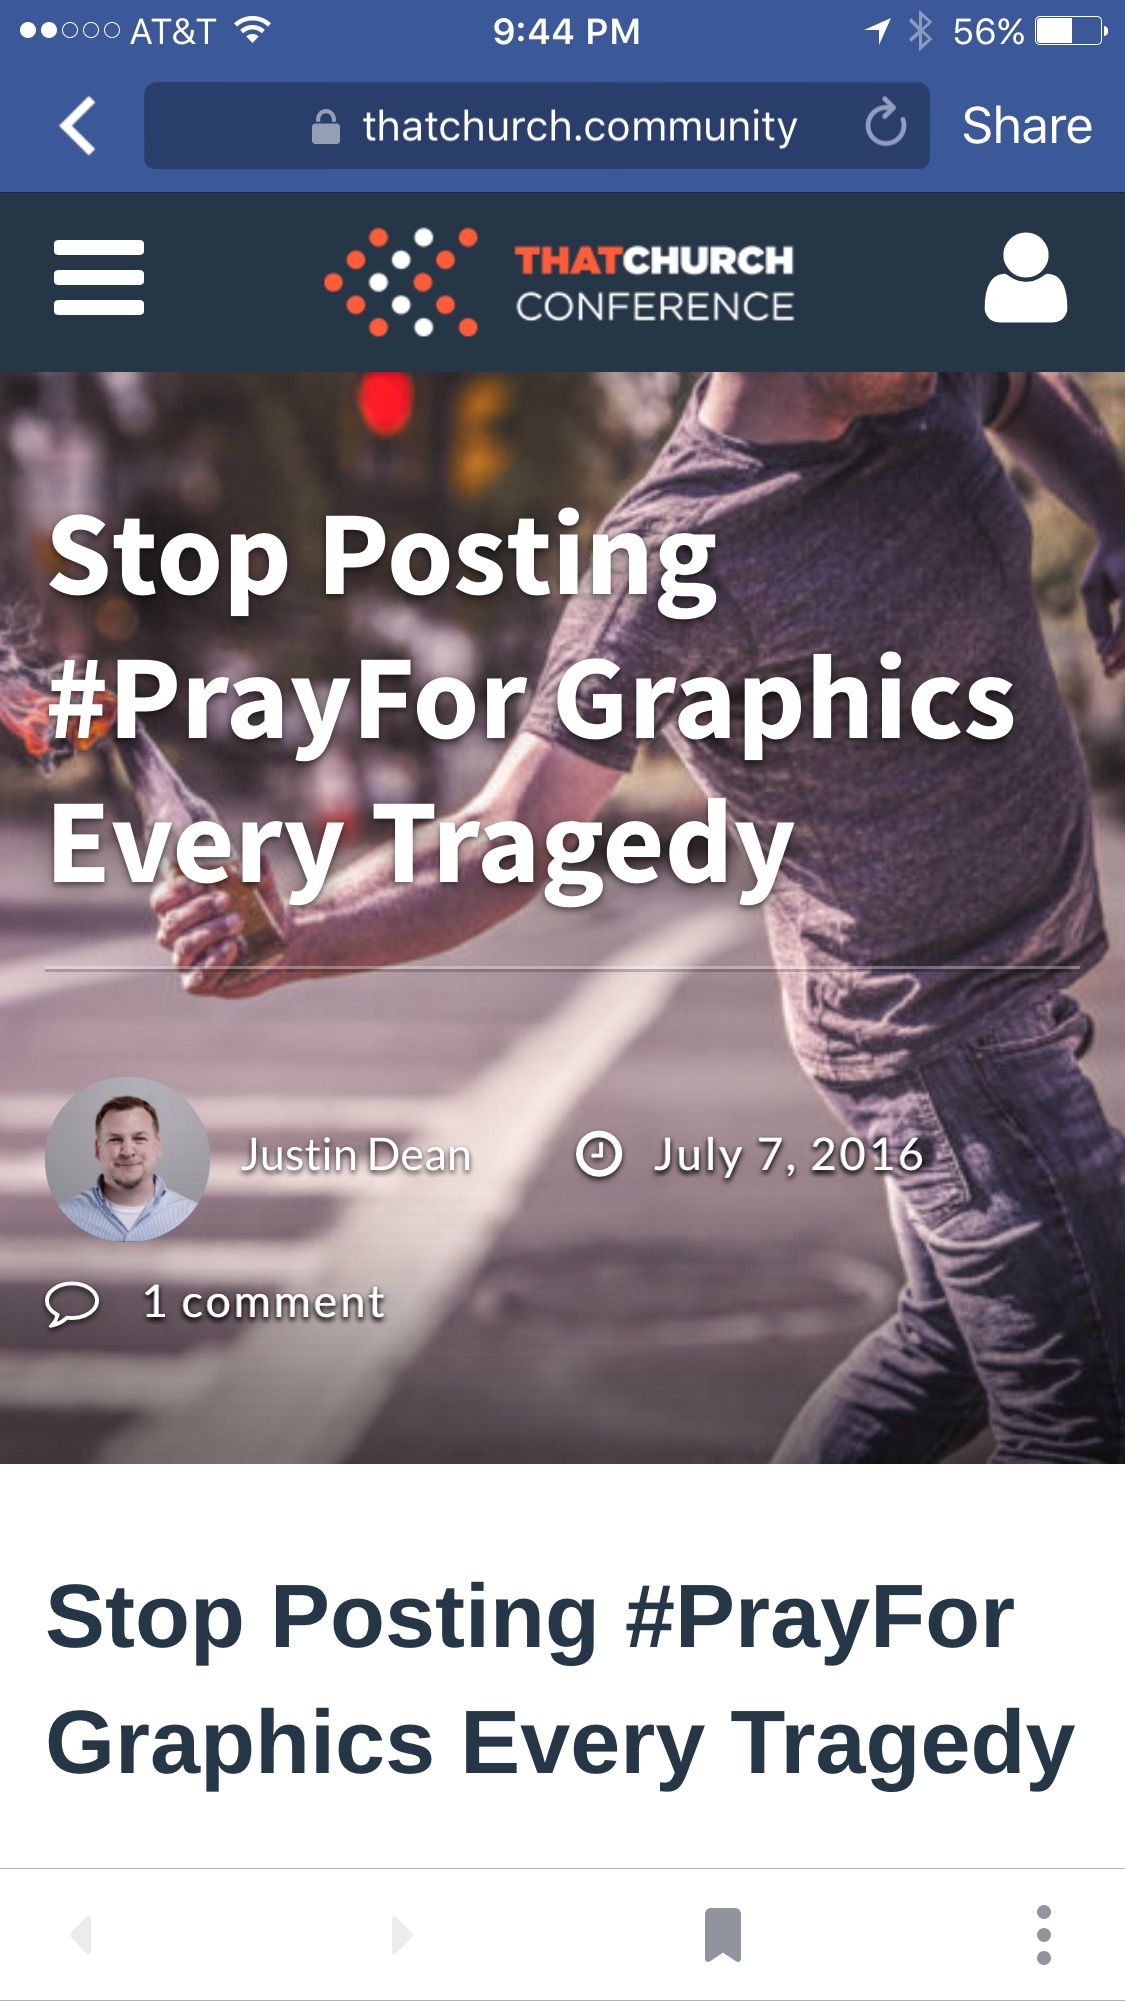 pray graphics churches social medi